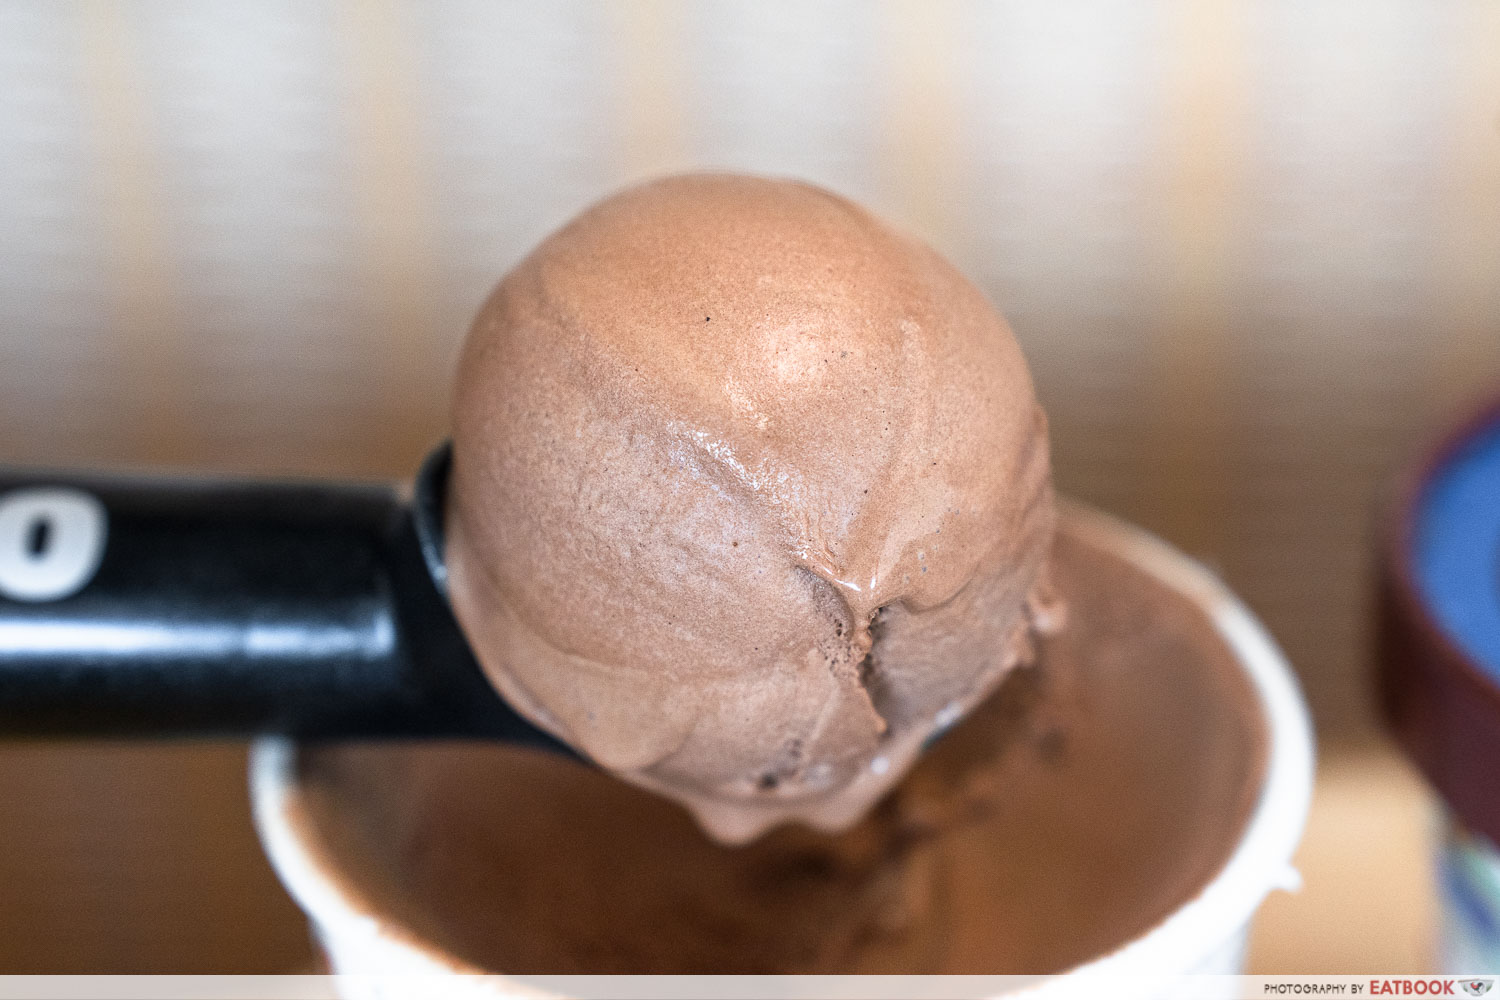 oatside ice cream - chocolate scoop